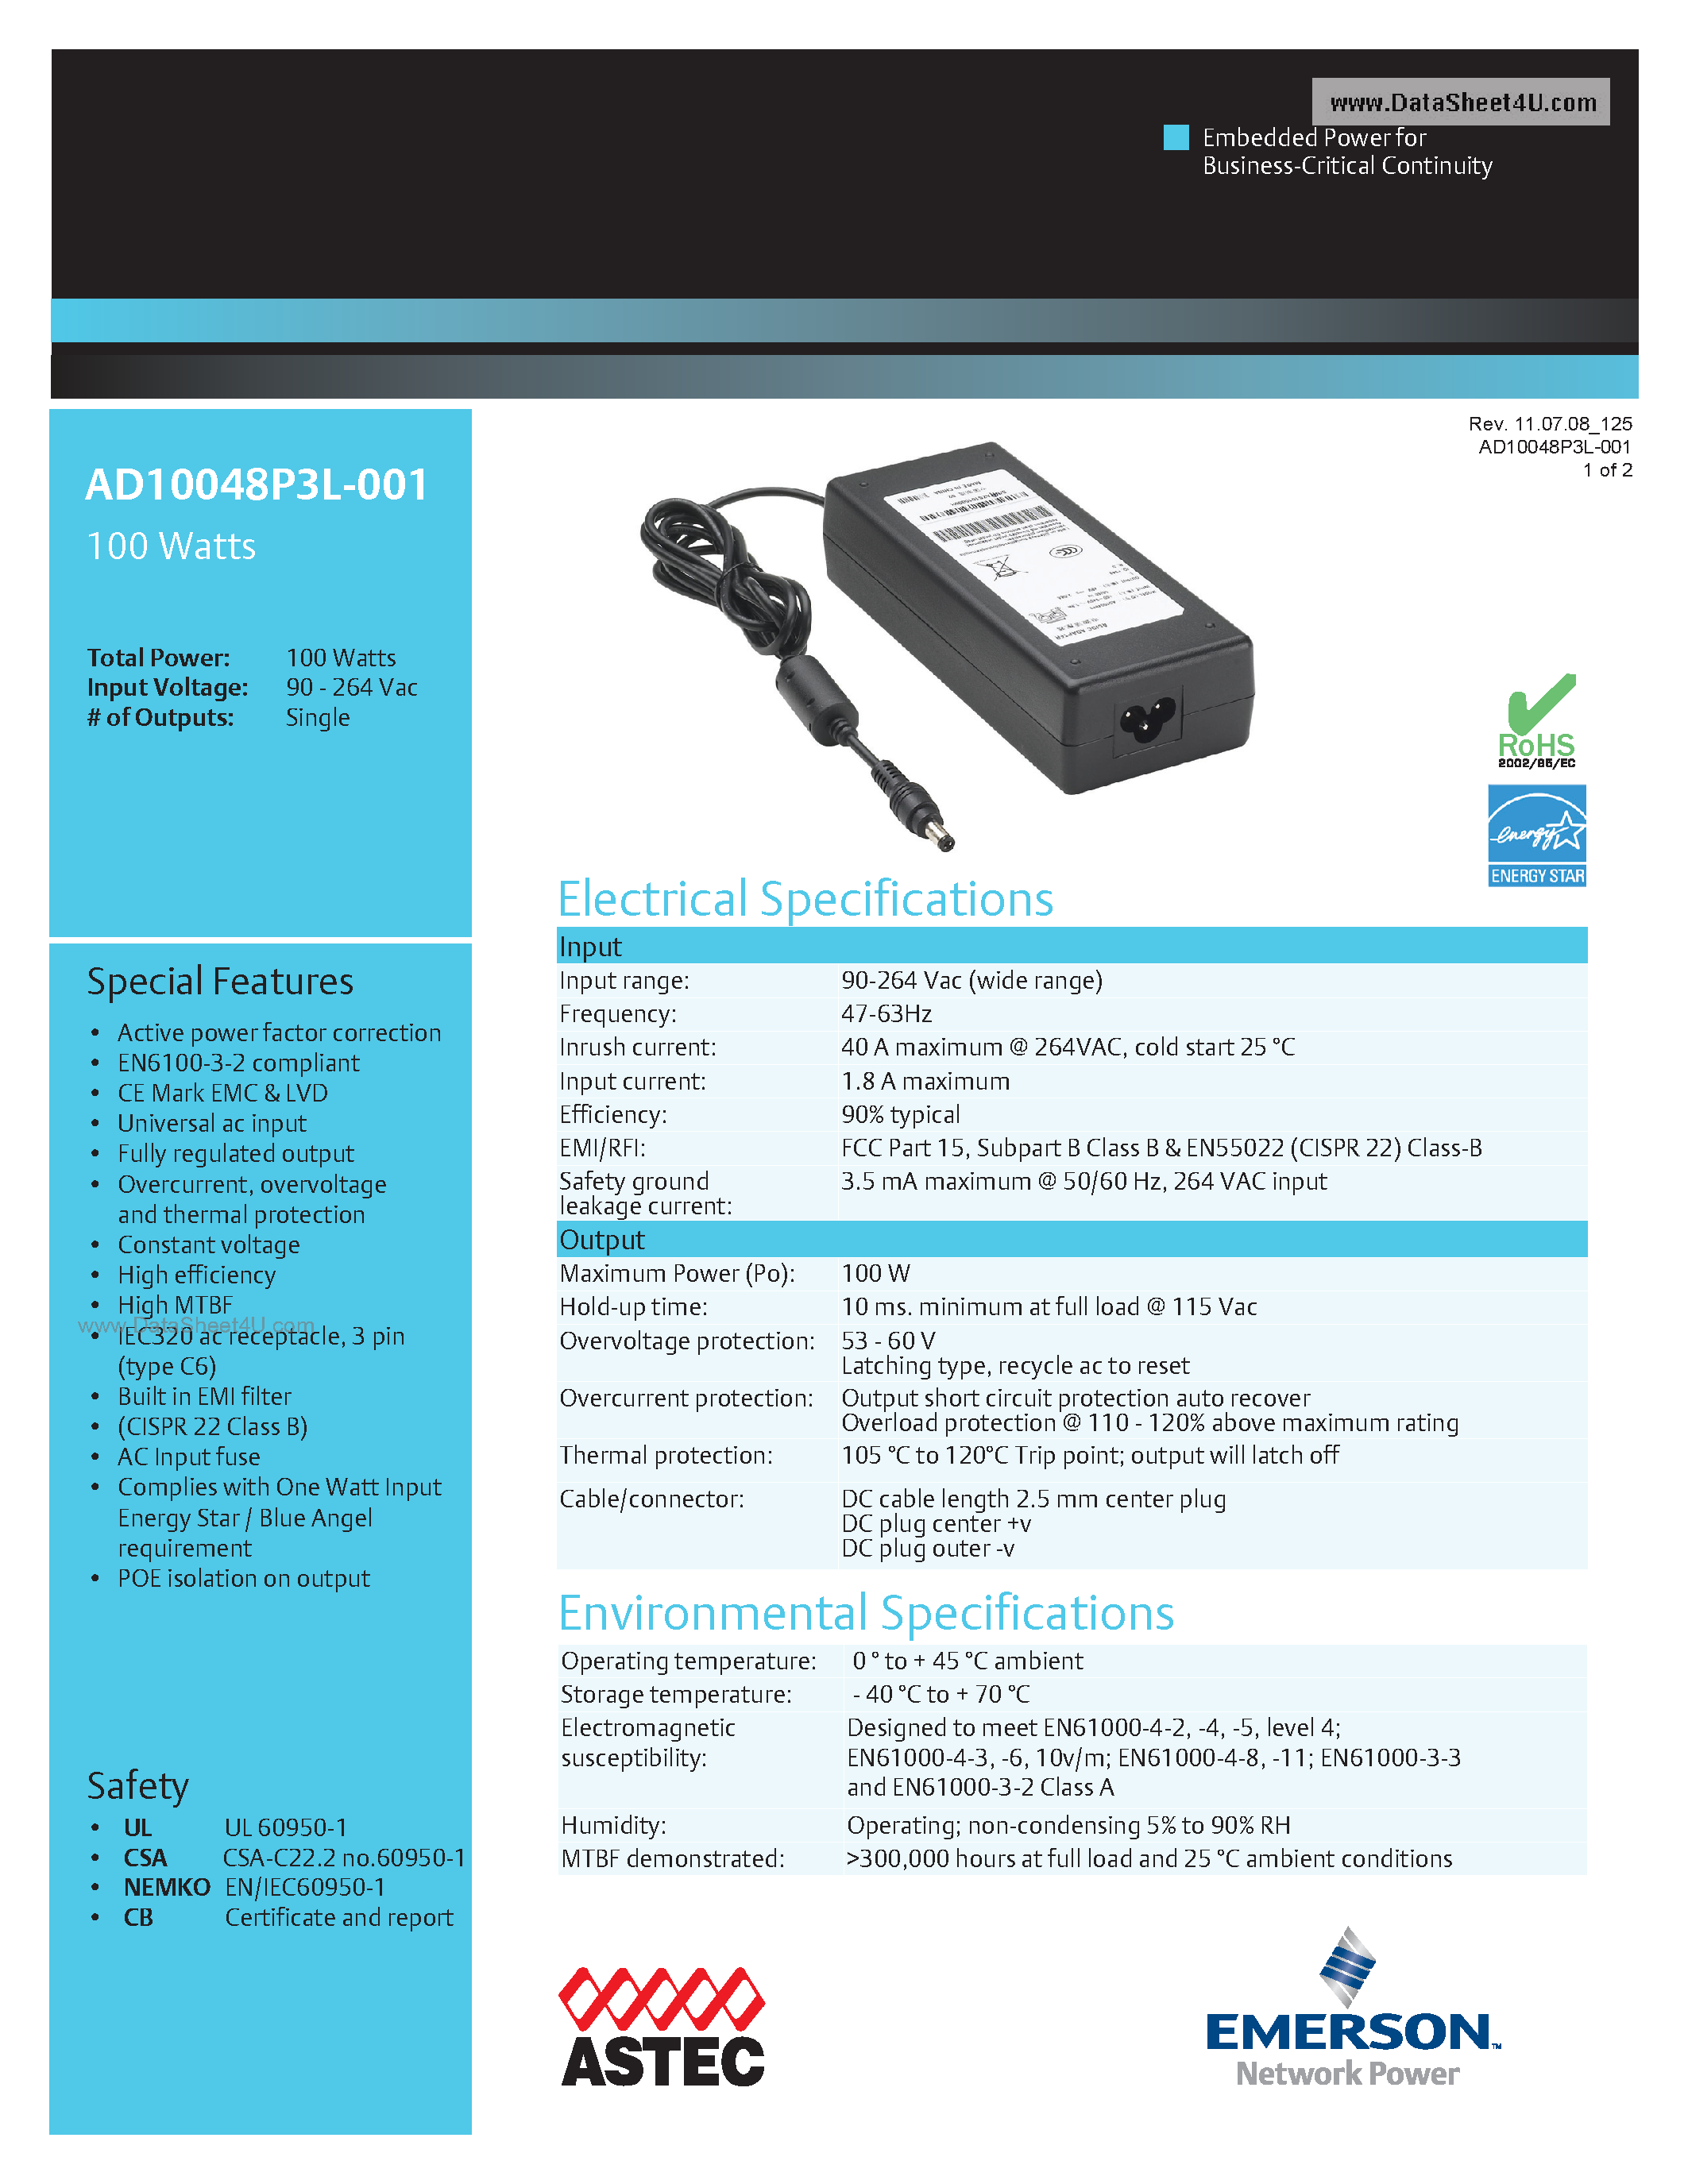 Даташит AD10048P3L-001 - AC-DC / External Freestanding Adapter страница 1